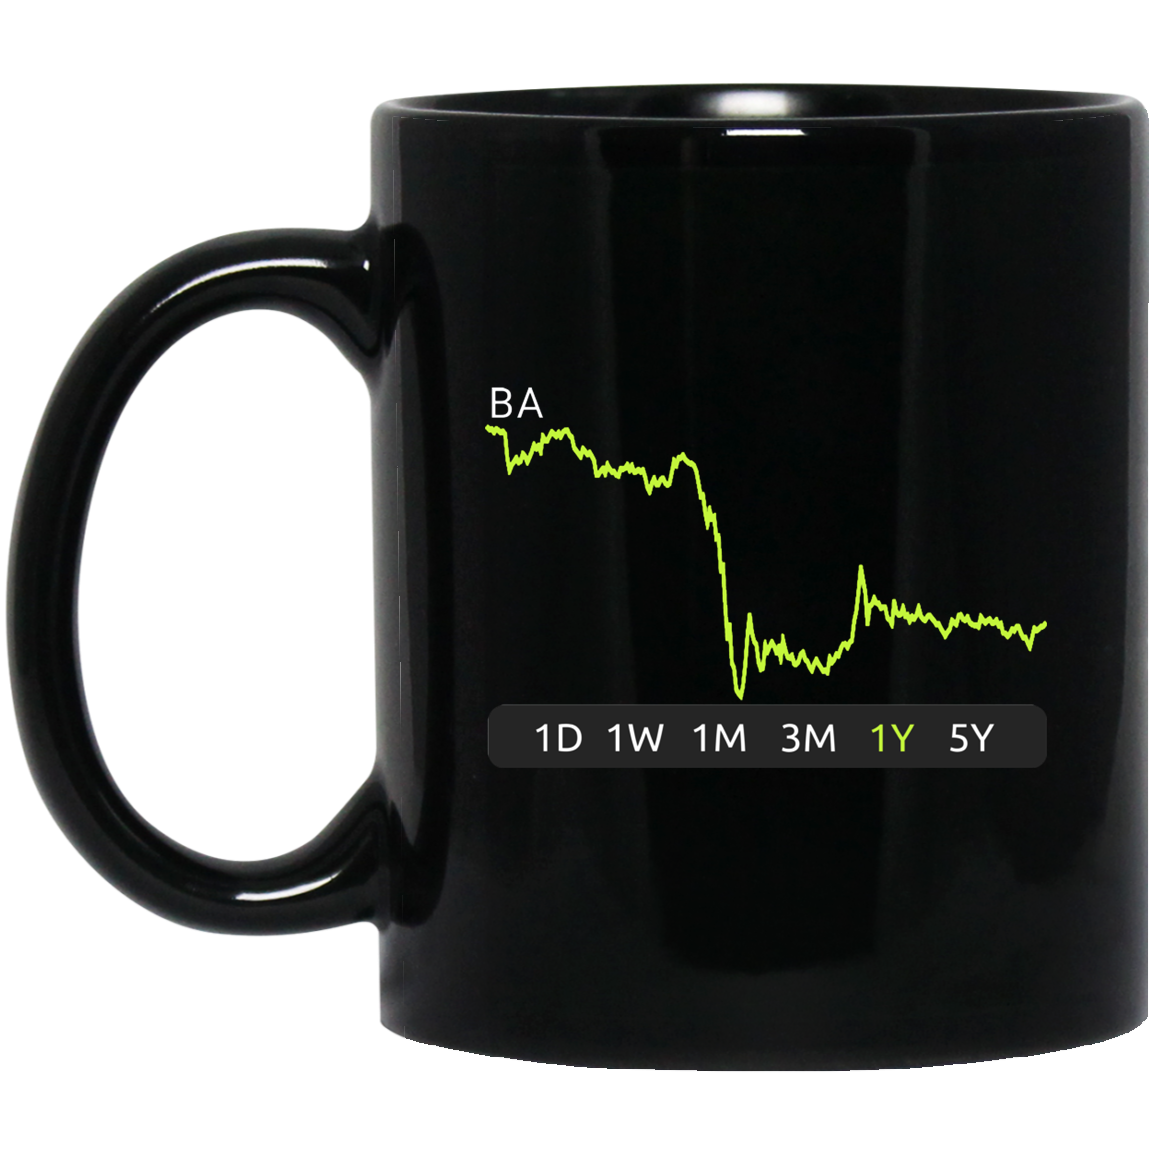 BA Stock 1y Mug